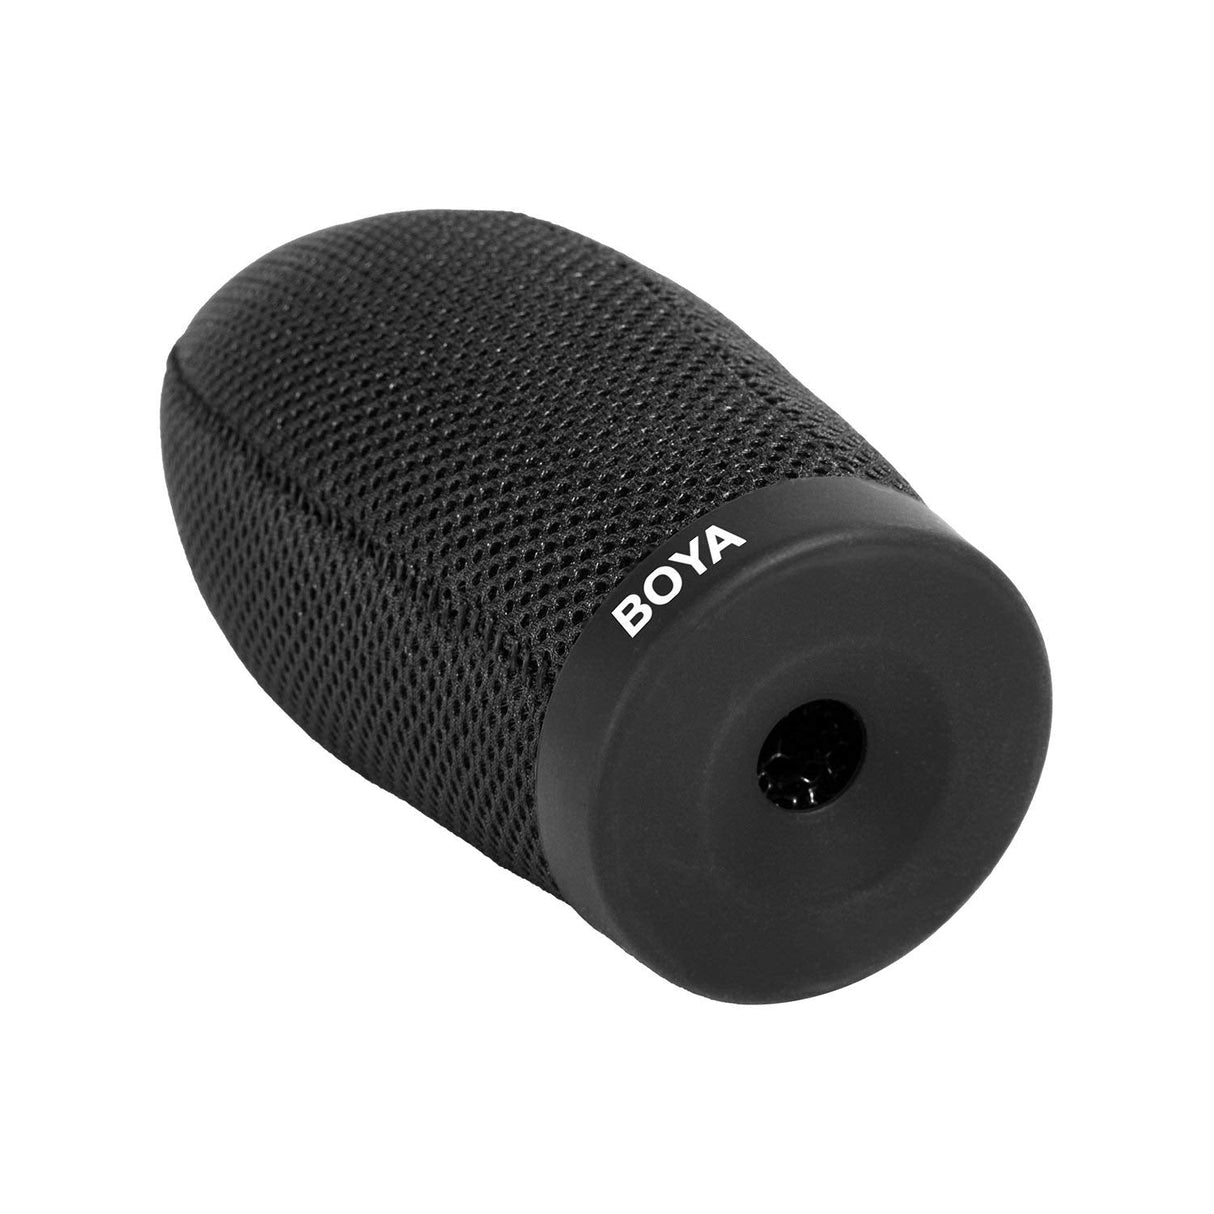 BOYA BY-T160 Inside Depth 160mm Professional Windshield for Shotgun Microphones